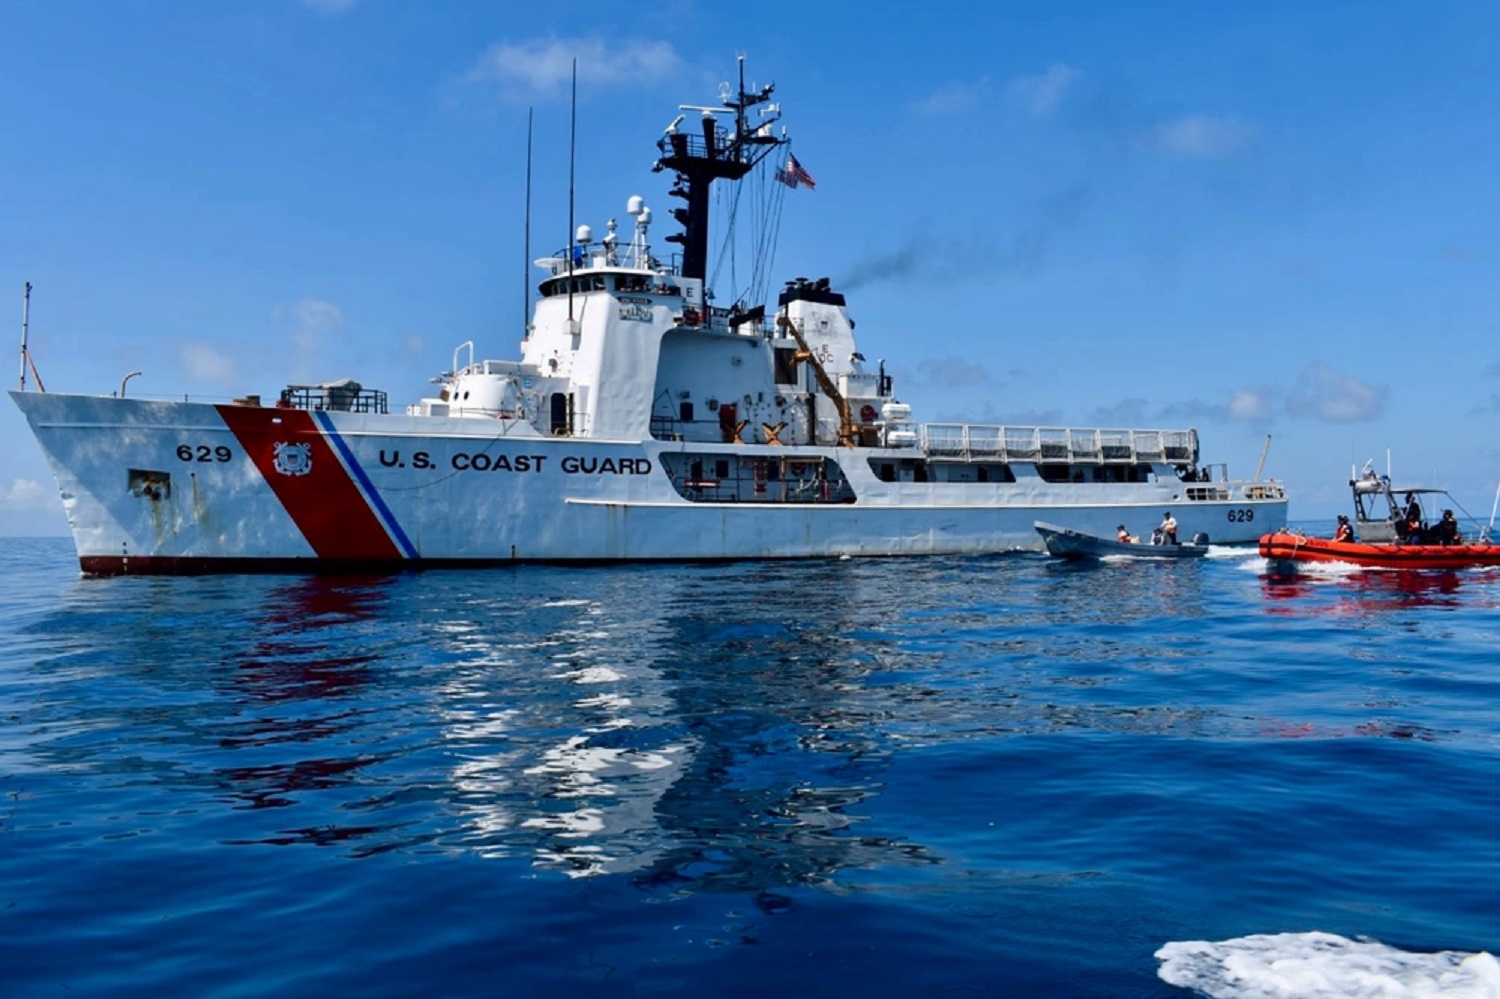 U.S. Coast Guard Reliance-class medium endurance cutter USCGC Decisive (WMEC 629)